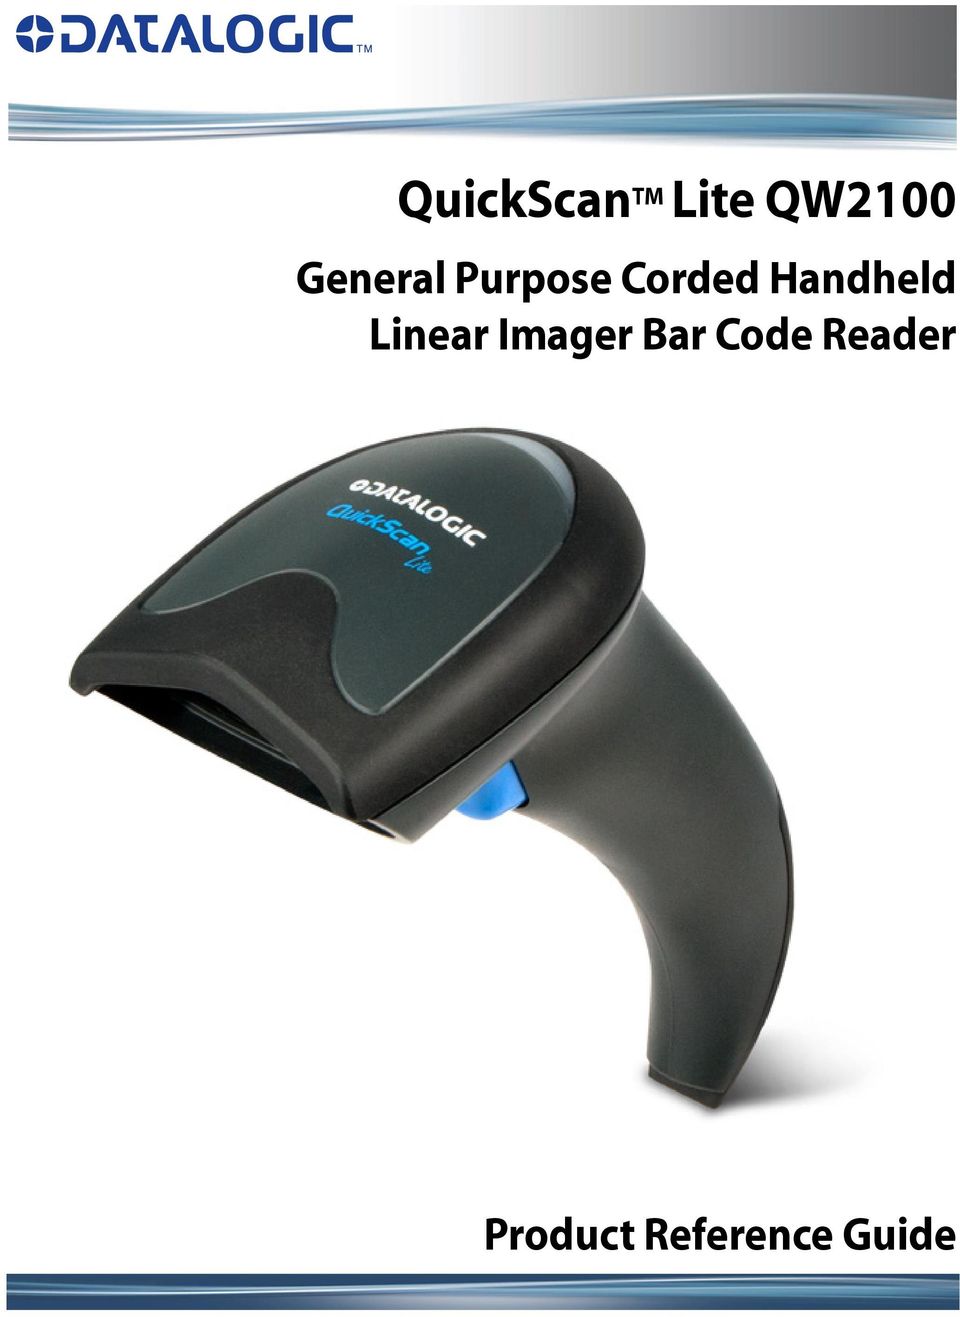 Handheld Linear Imager Bar